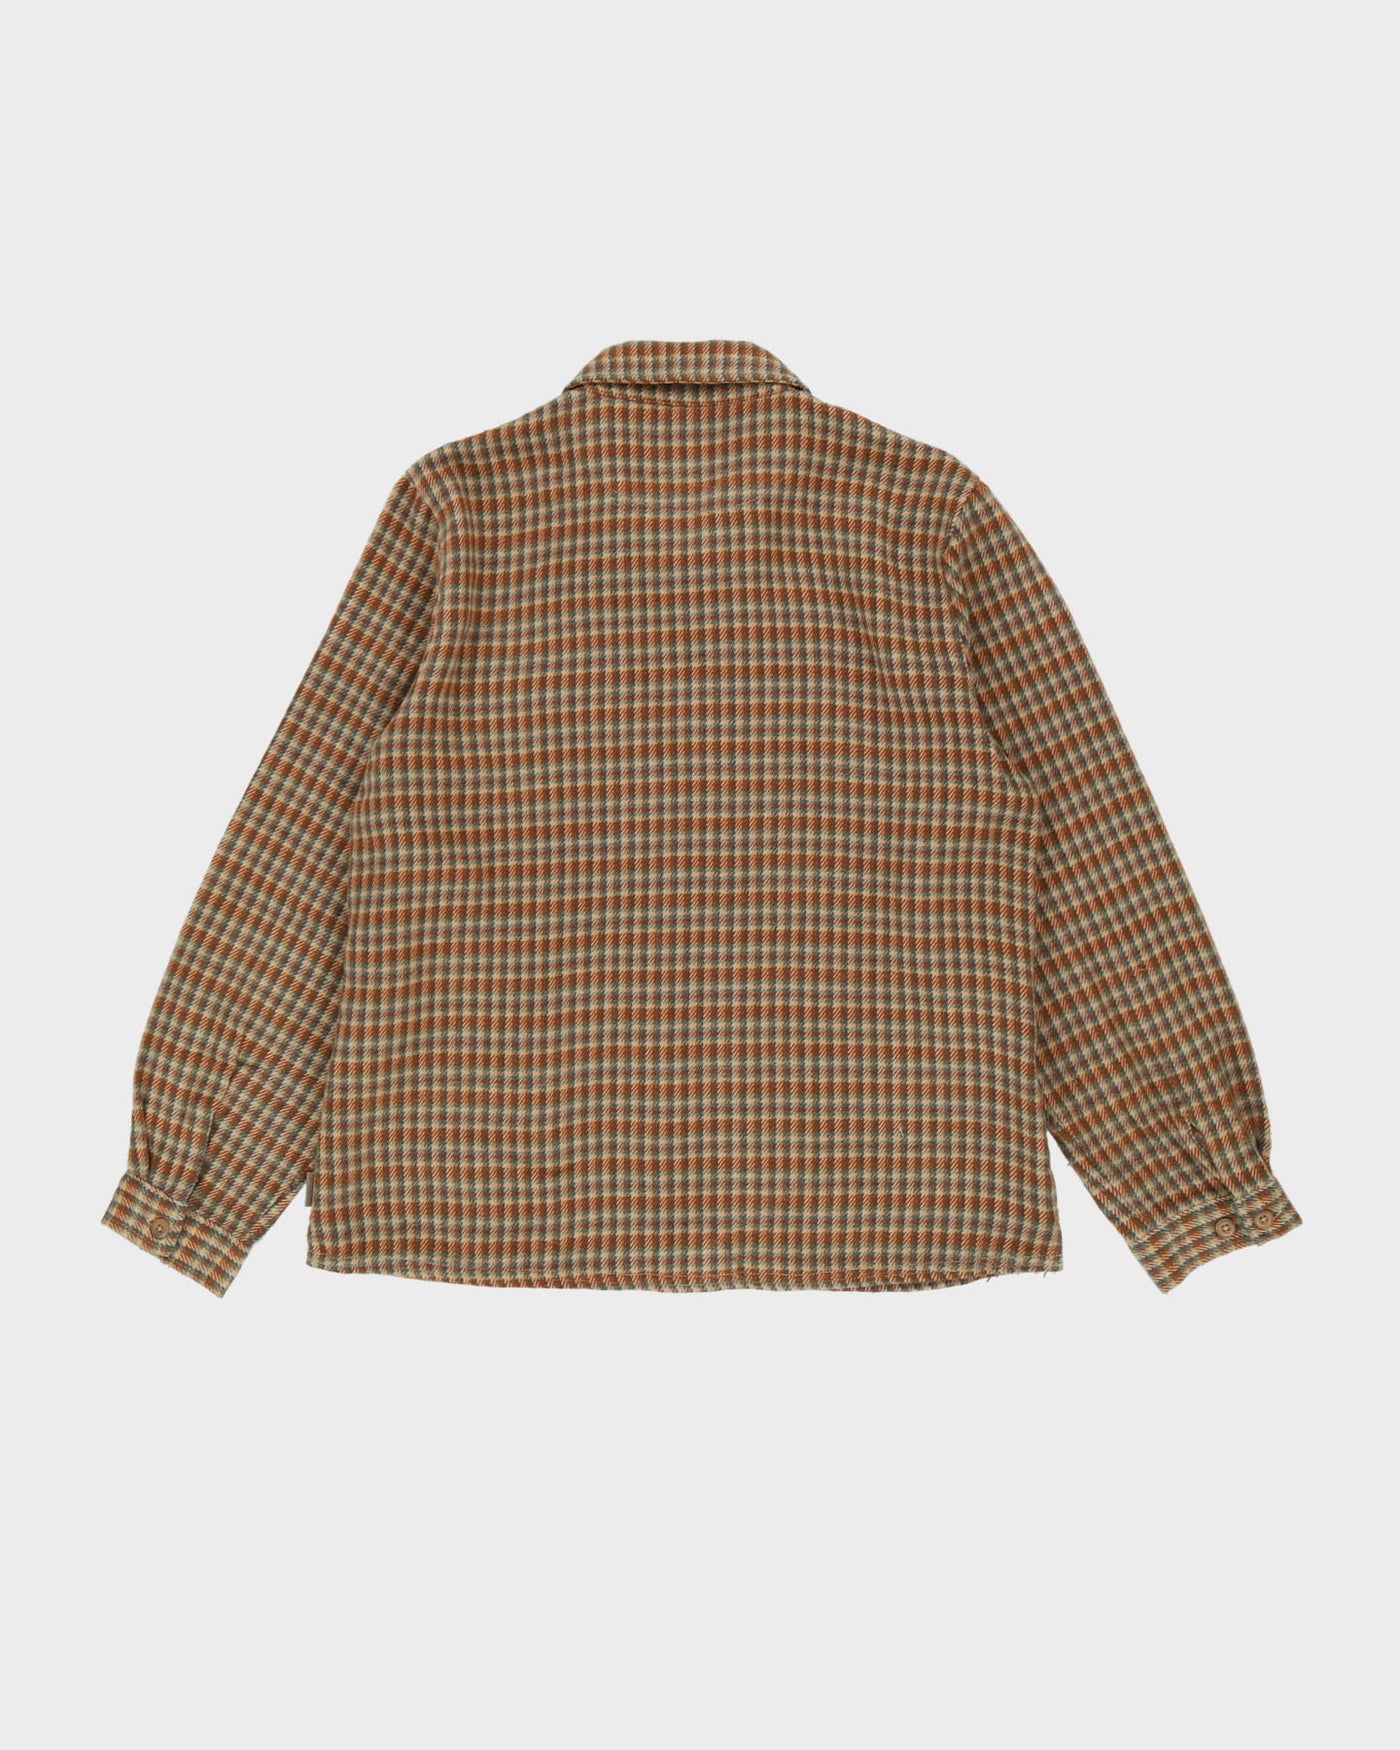 Woolrich Brown / Beige Check Patterned Full-Zip Jacket - L